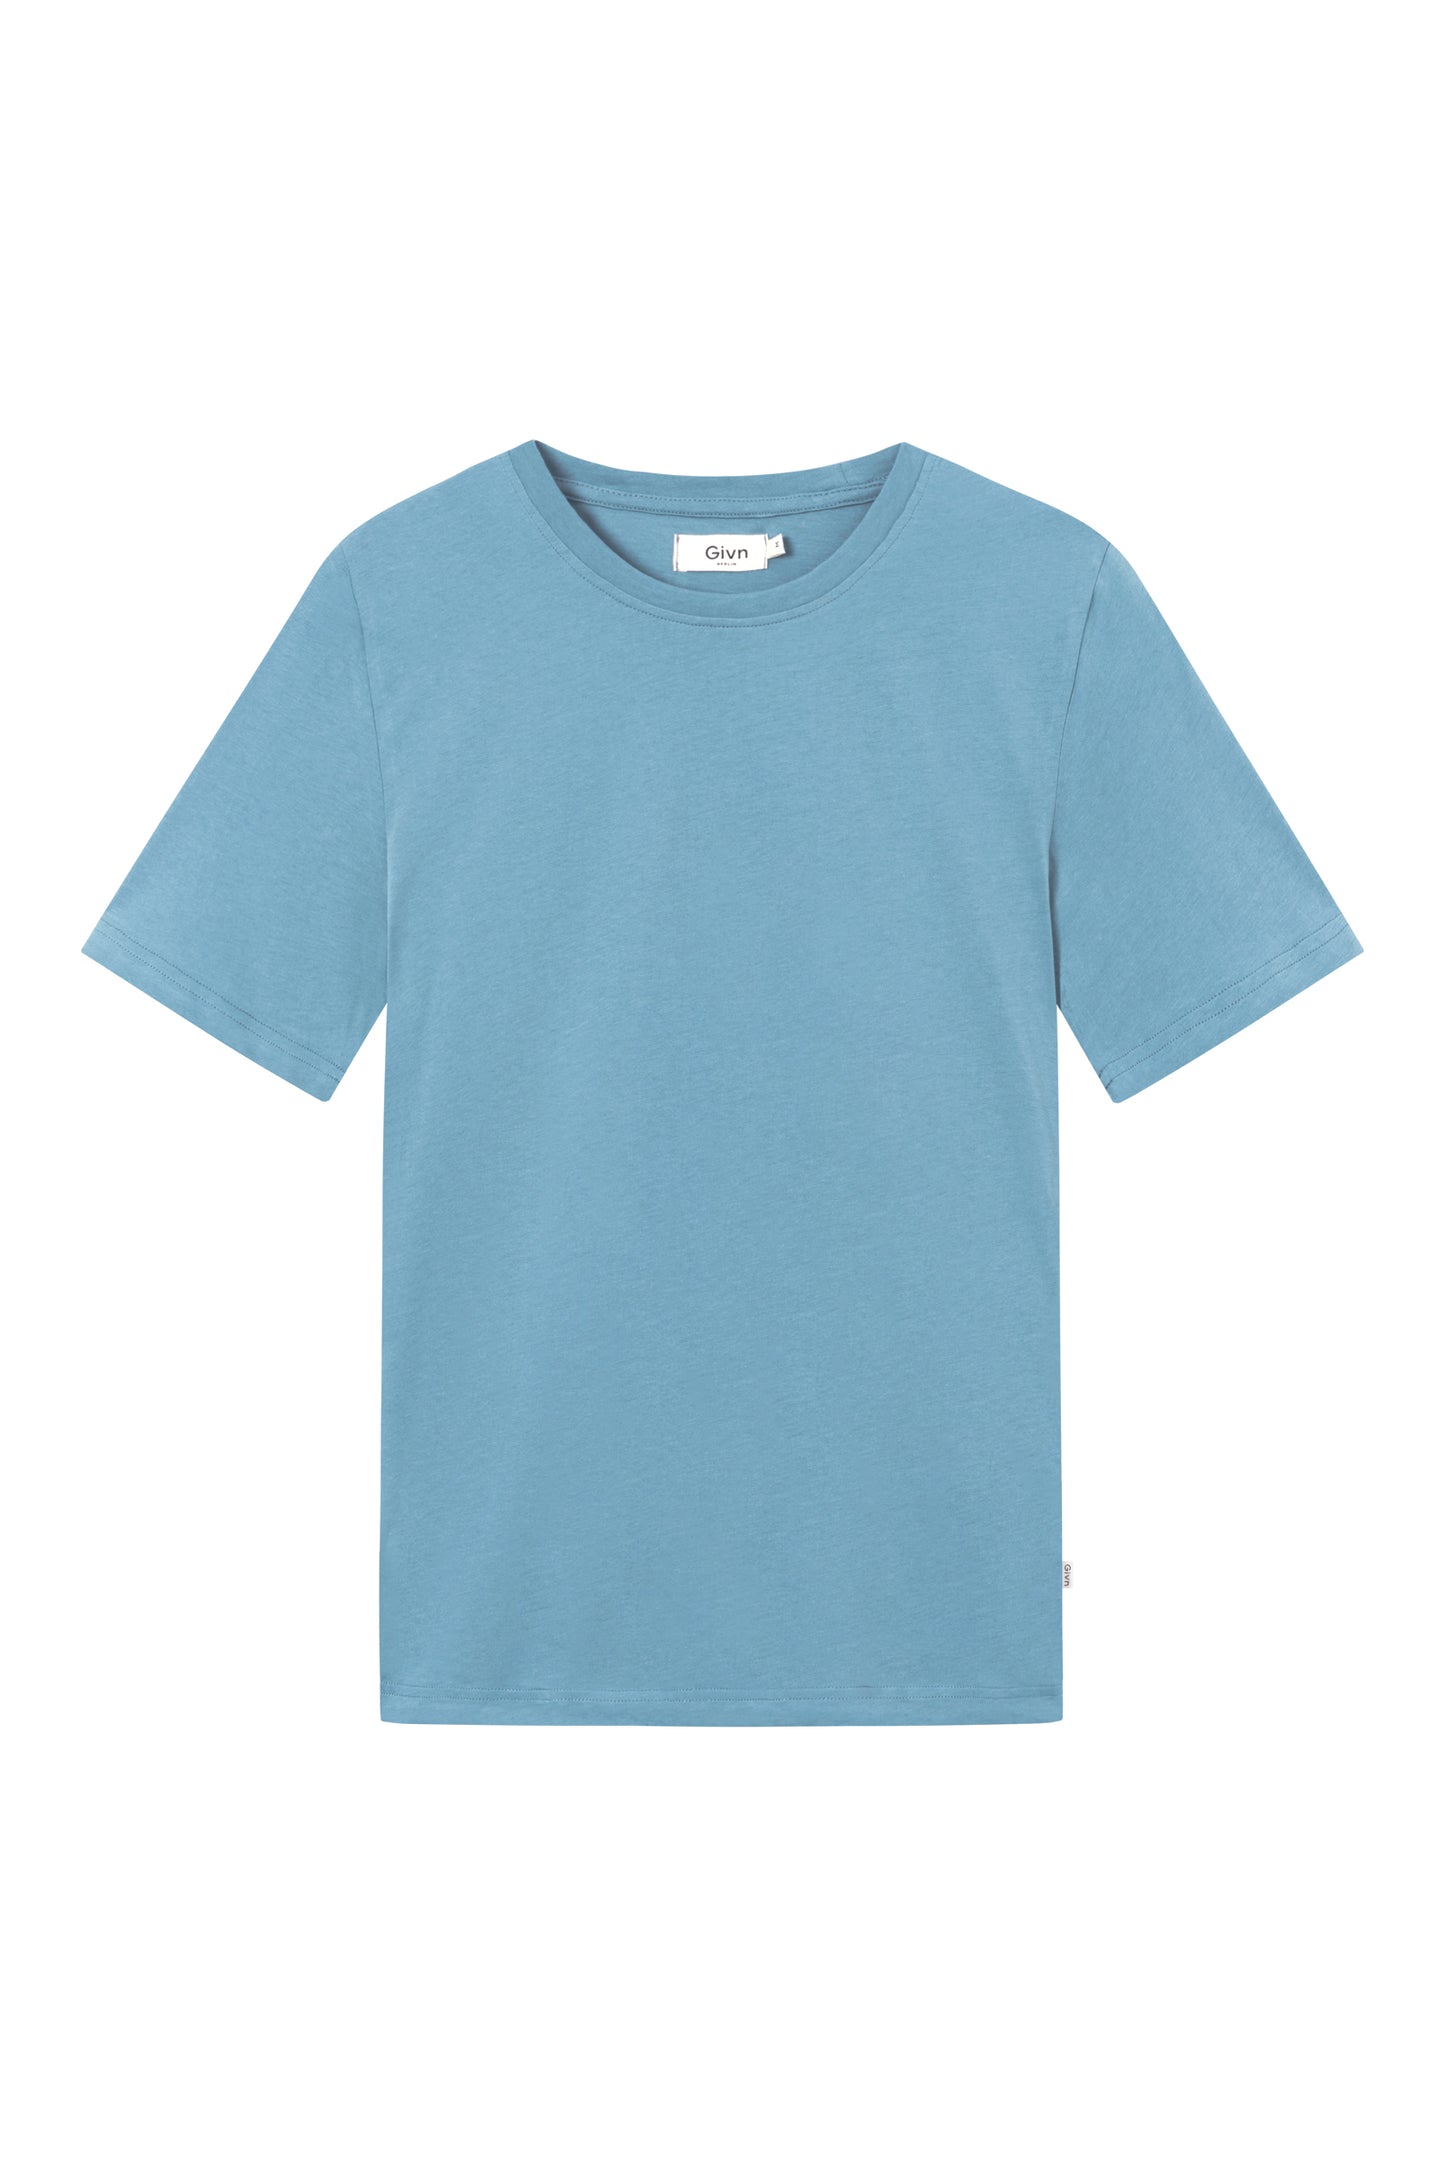 t-shirt colby, arctic blue, herren - givn